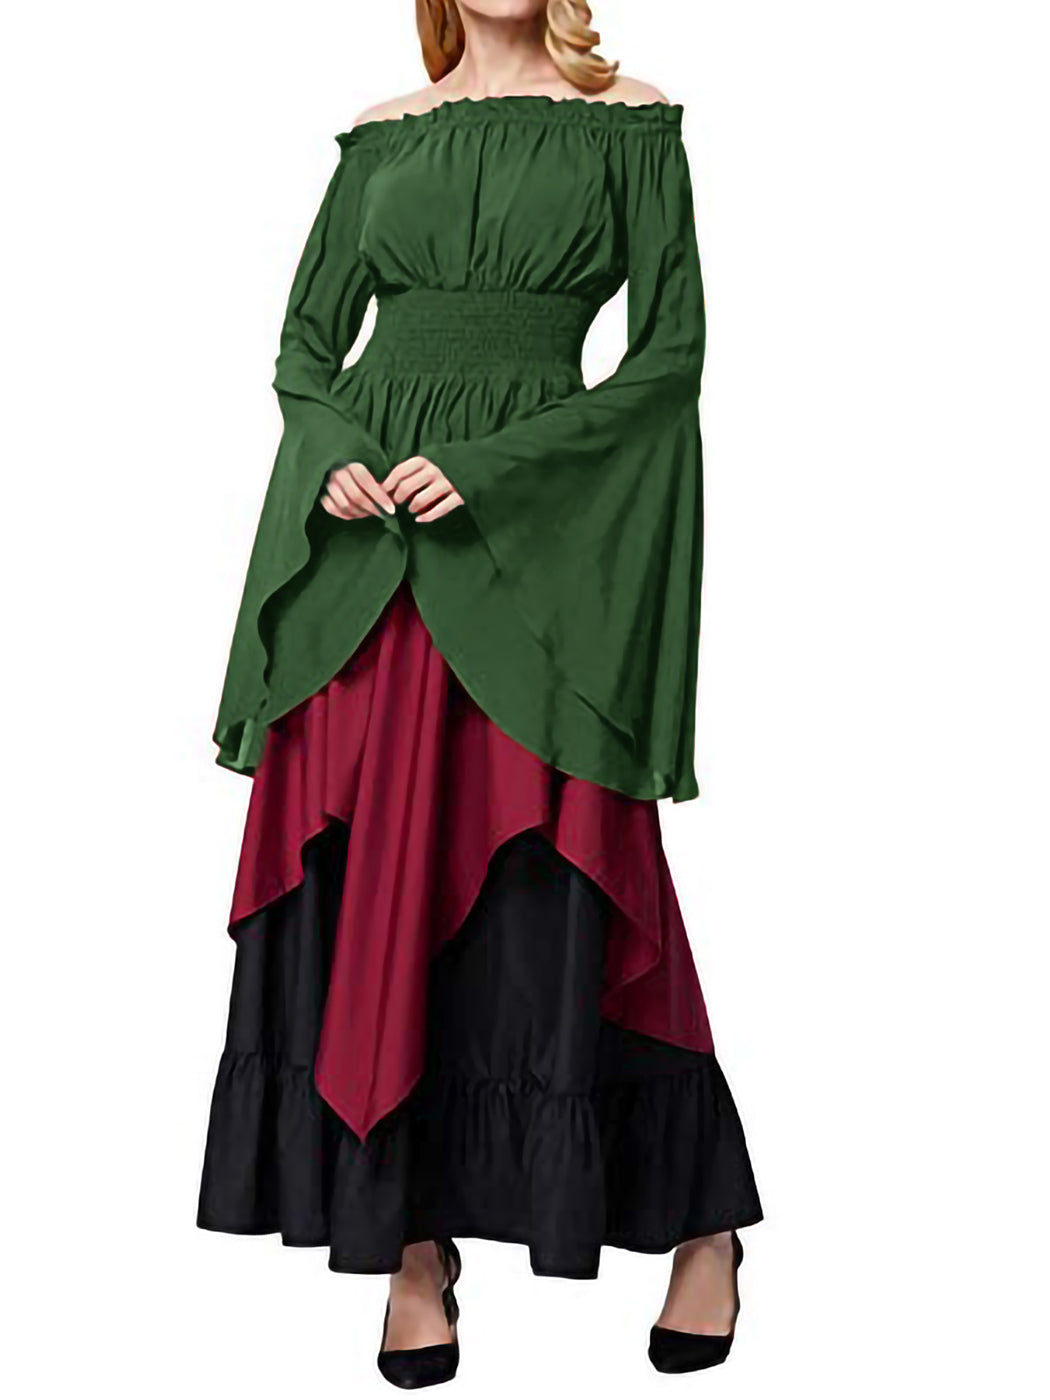 Long Sleeve Off Shoulder Peasant Shirt Gothic Renaissance Blouse Medieval Victorian Costume Boho Tops